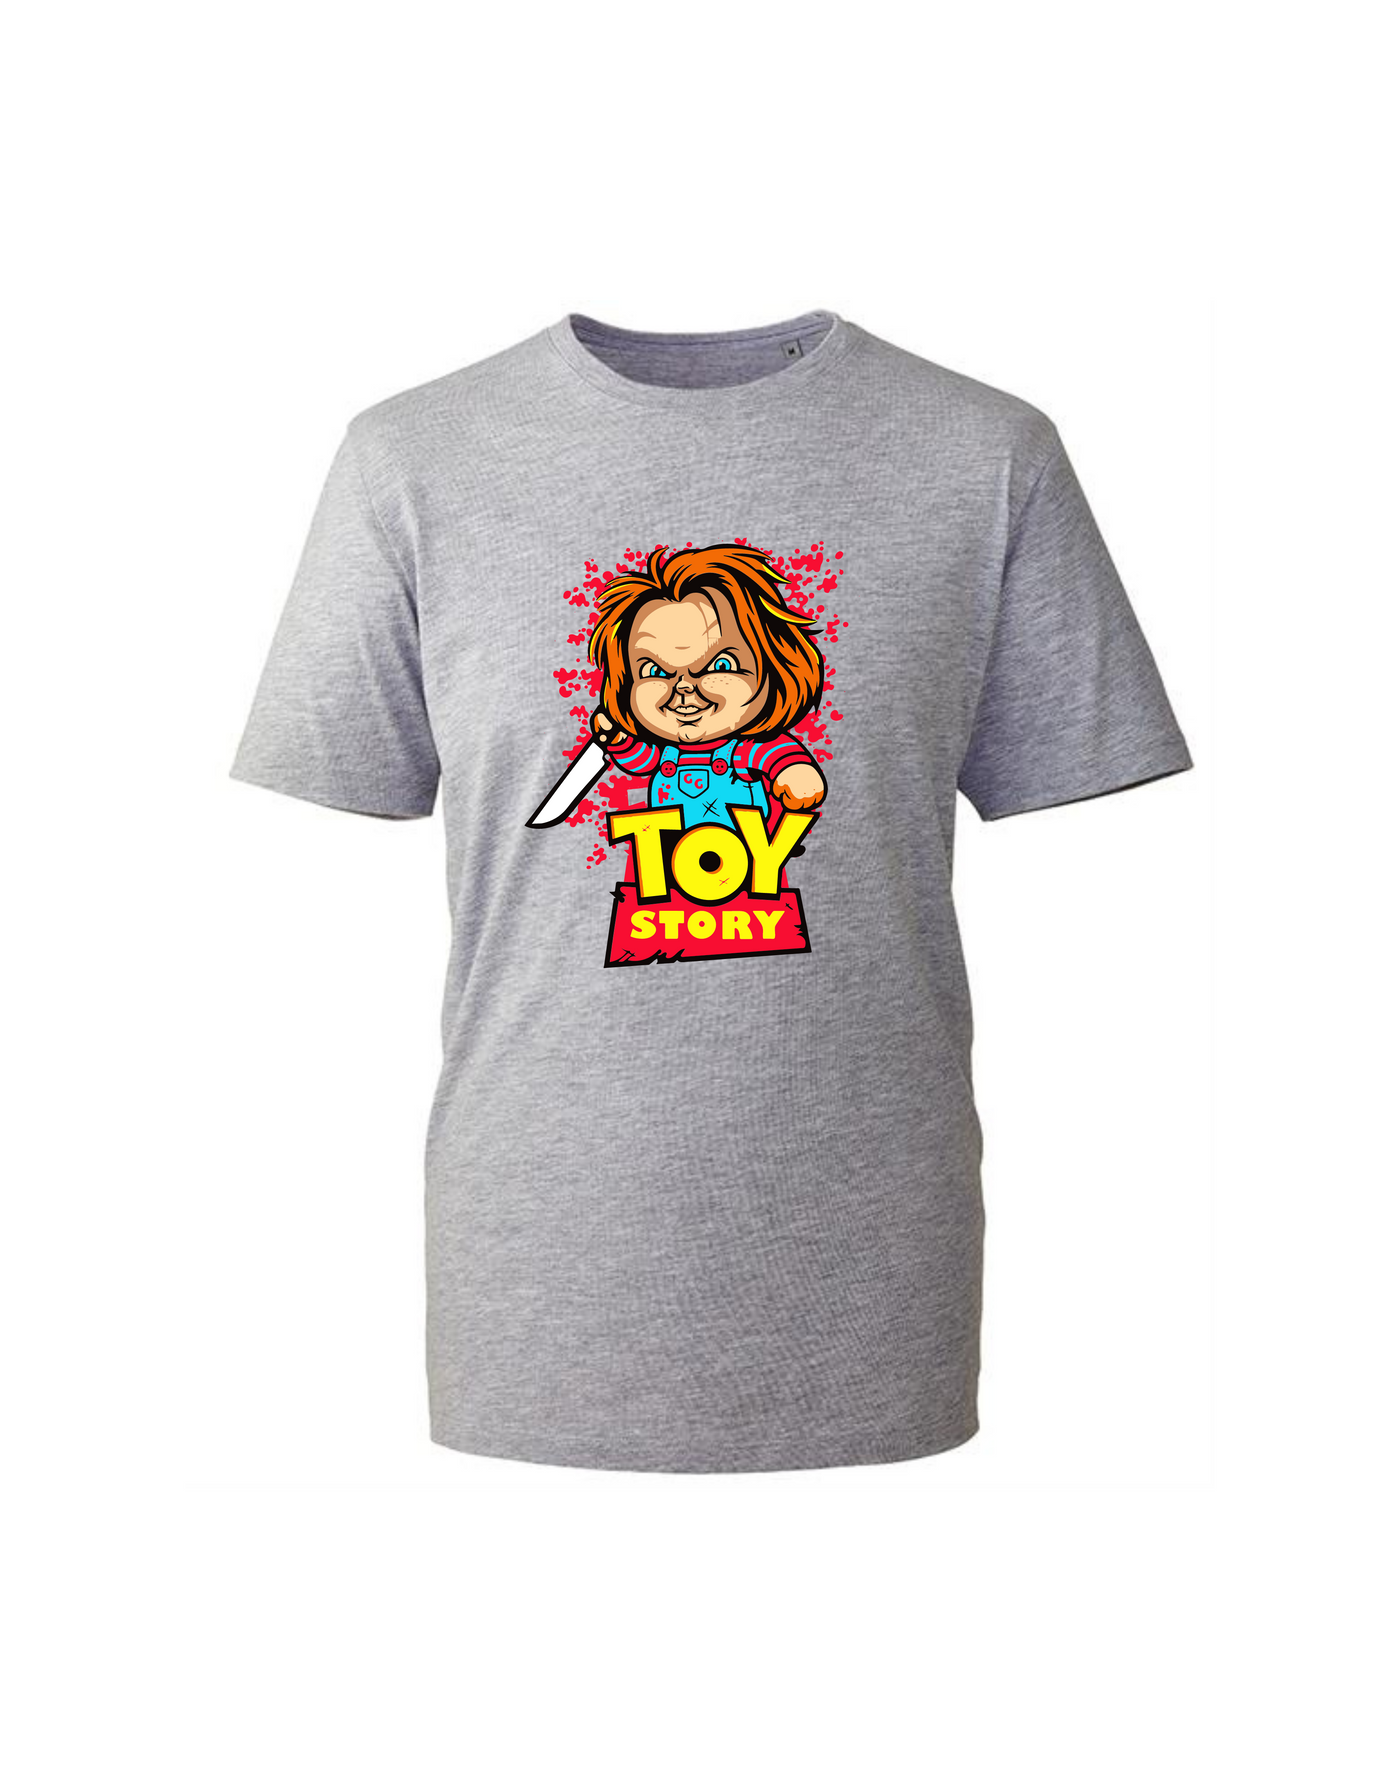 Chucky "Toy Story" Unisex Slogan T-Shirt